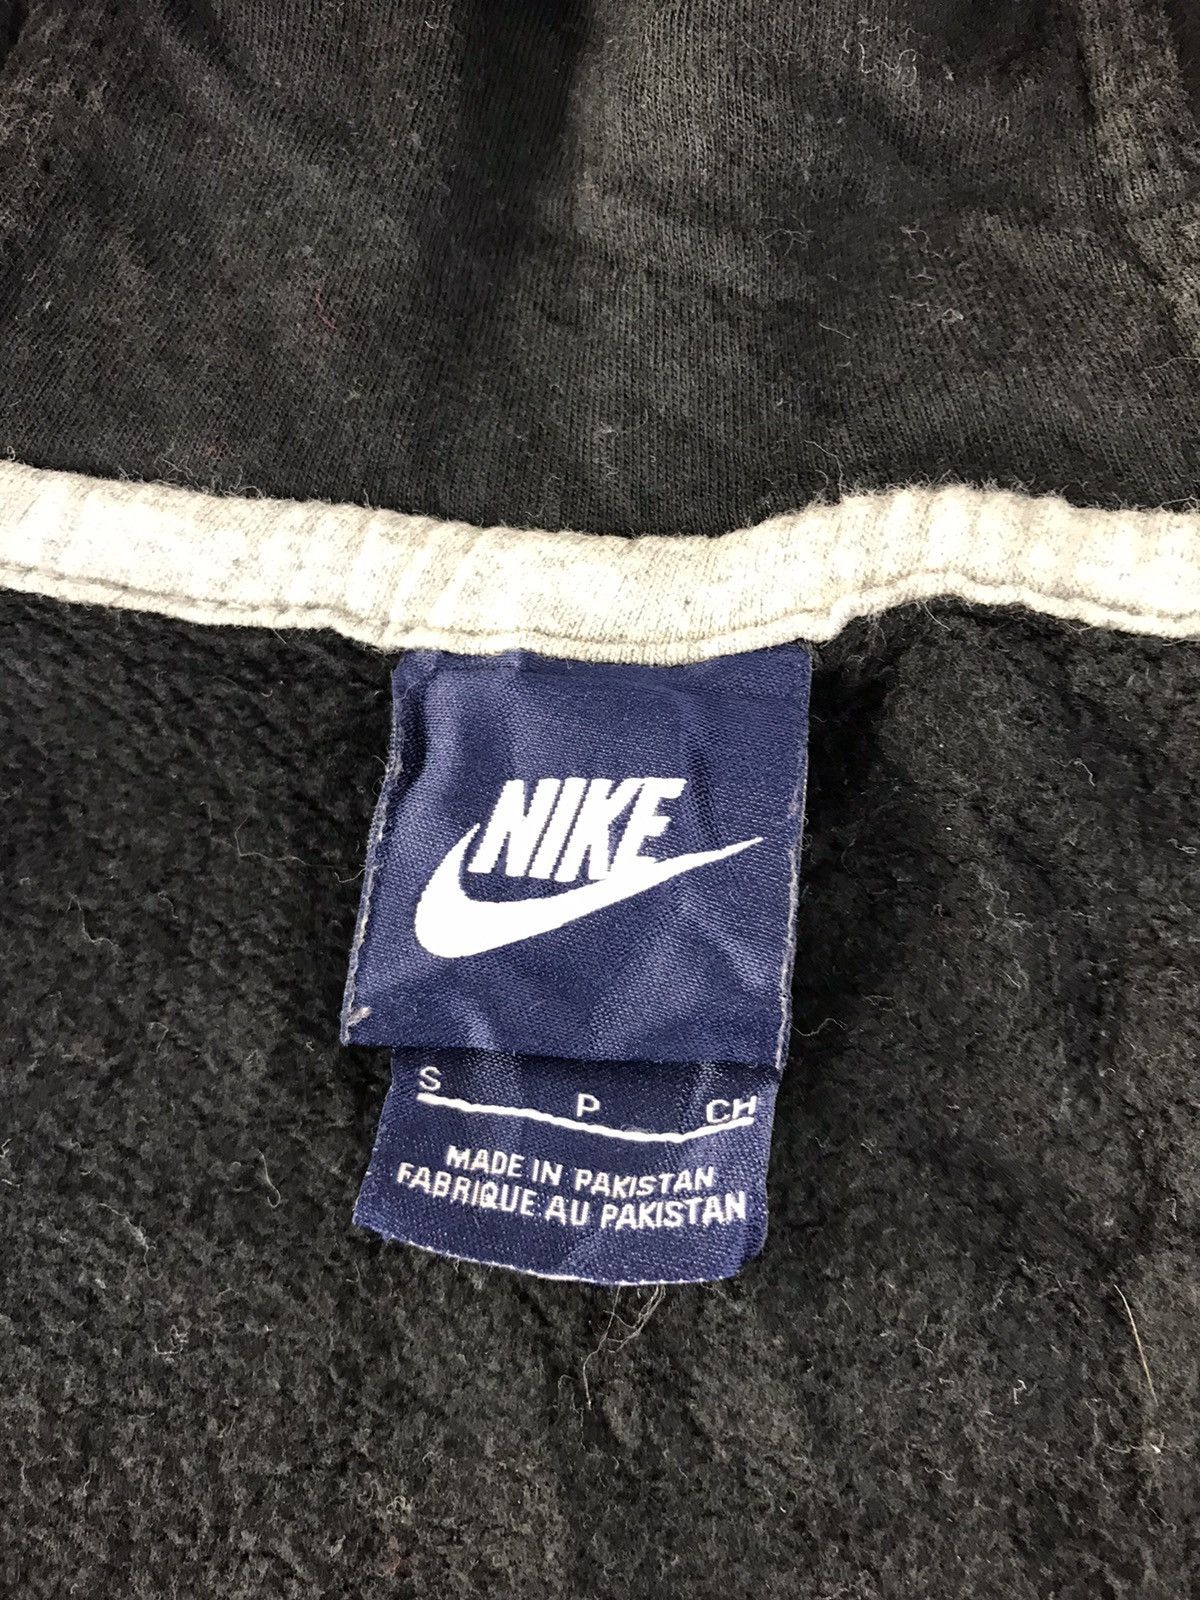 Nike Nike Marathon Finisher Student Run LA Hoodies Jacket Zip Up Size US M / EU 48-50 / 2 - 8 Thumbnail